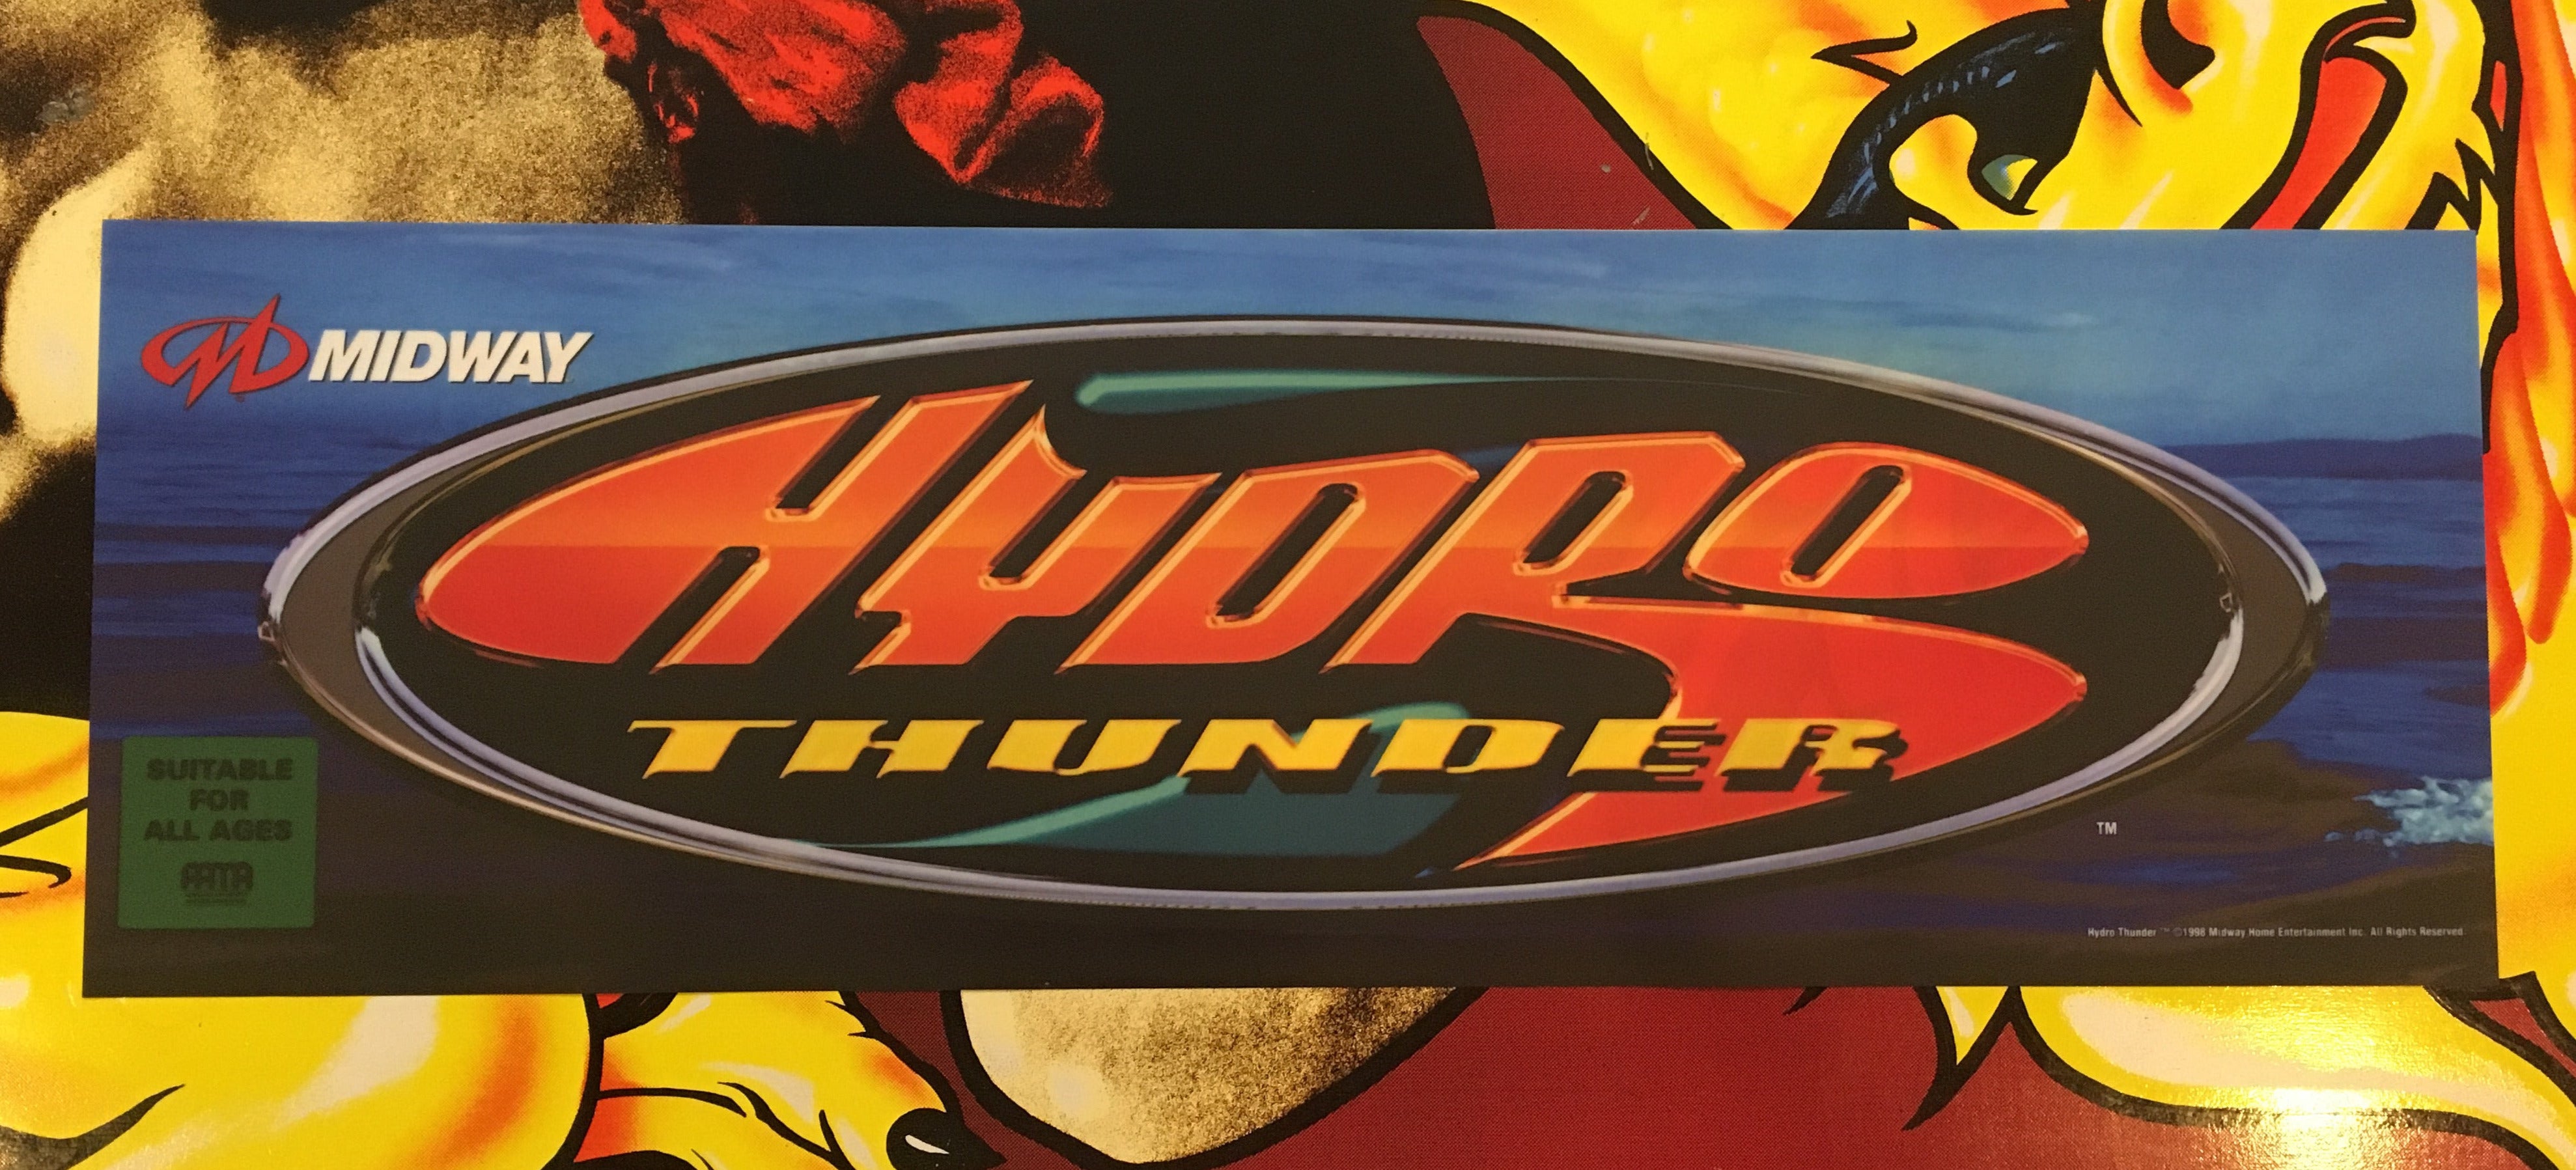 Chapiteau Hydro Thunder